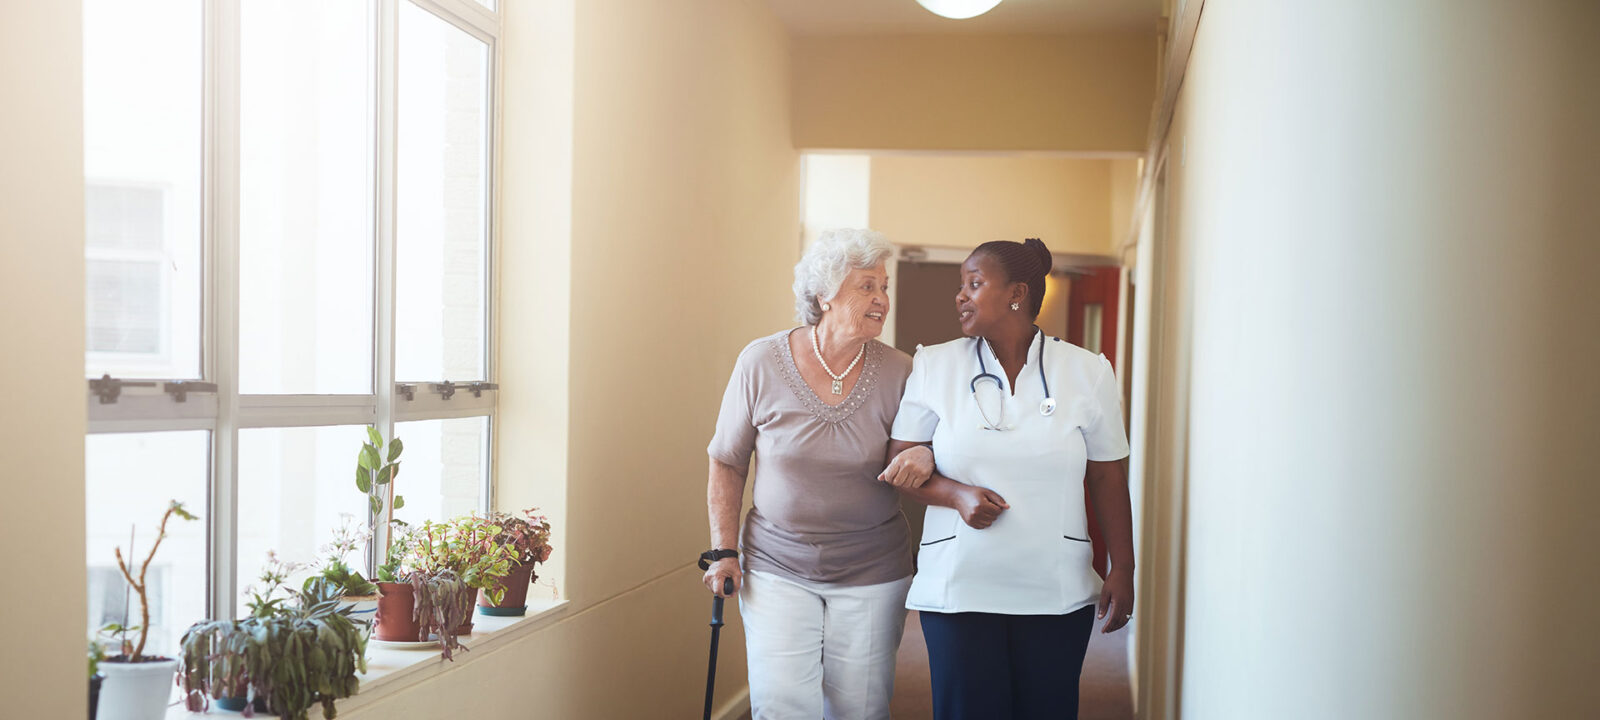 elderly woman and nurse walking arm and arm down hallway